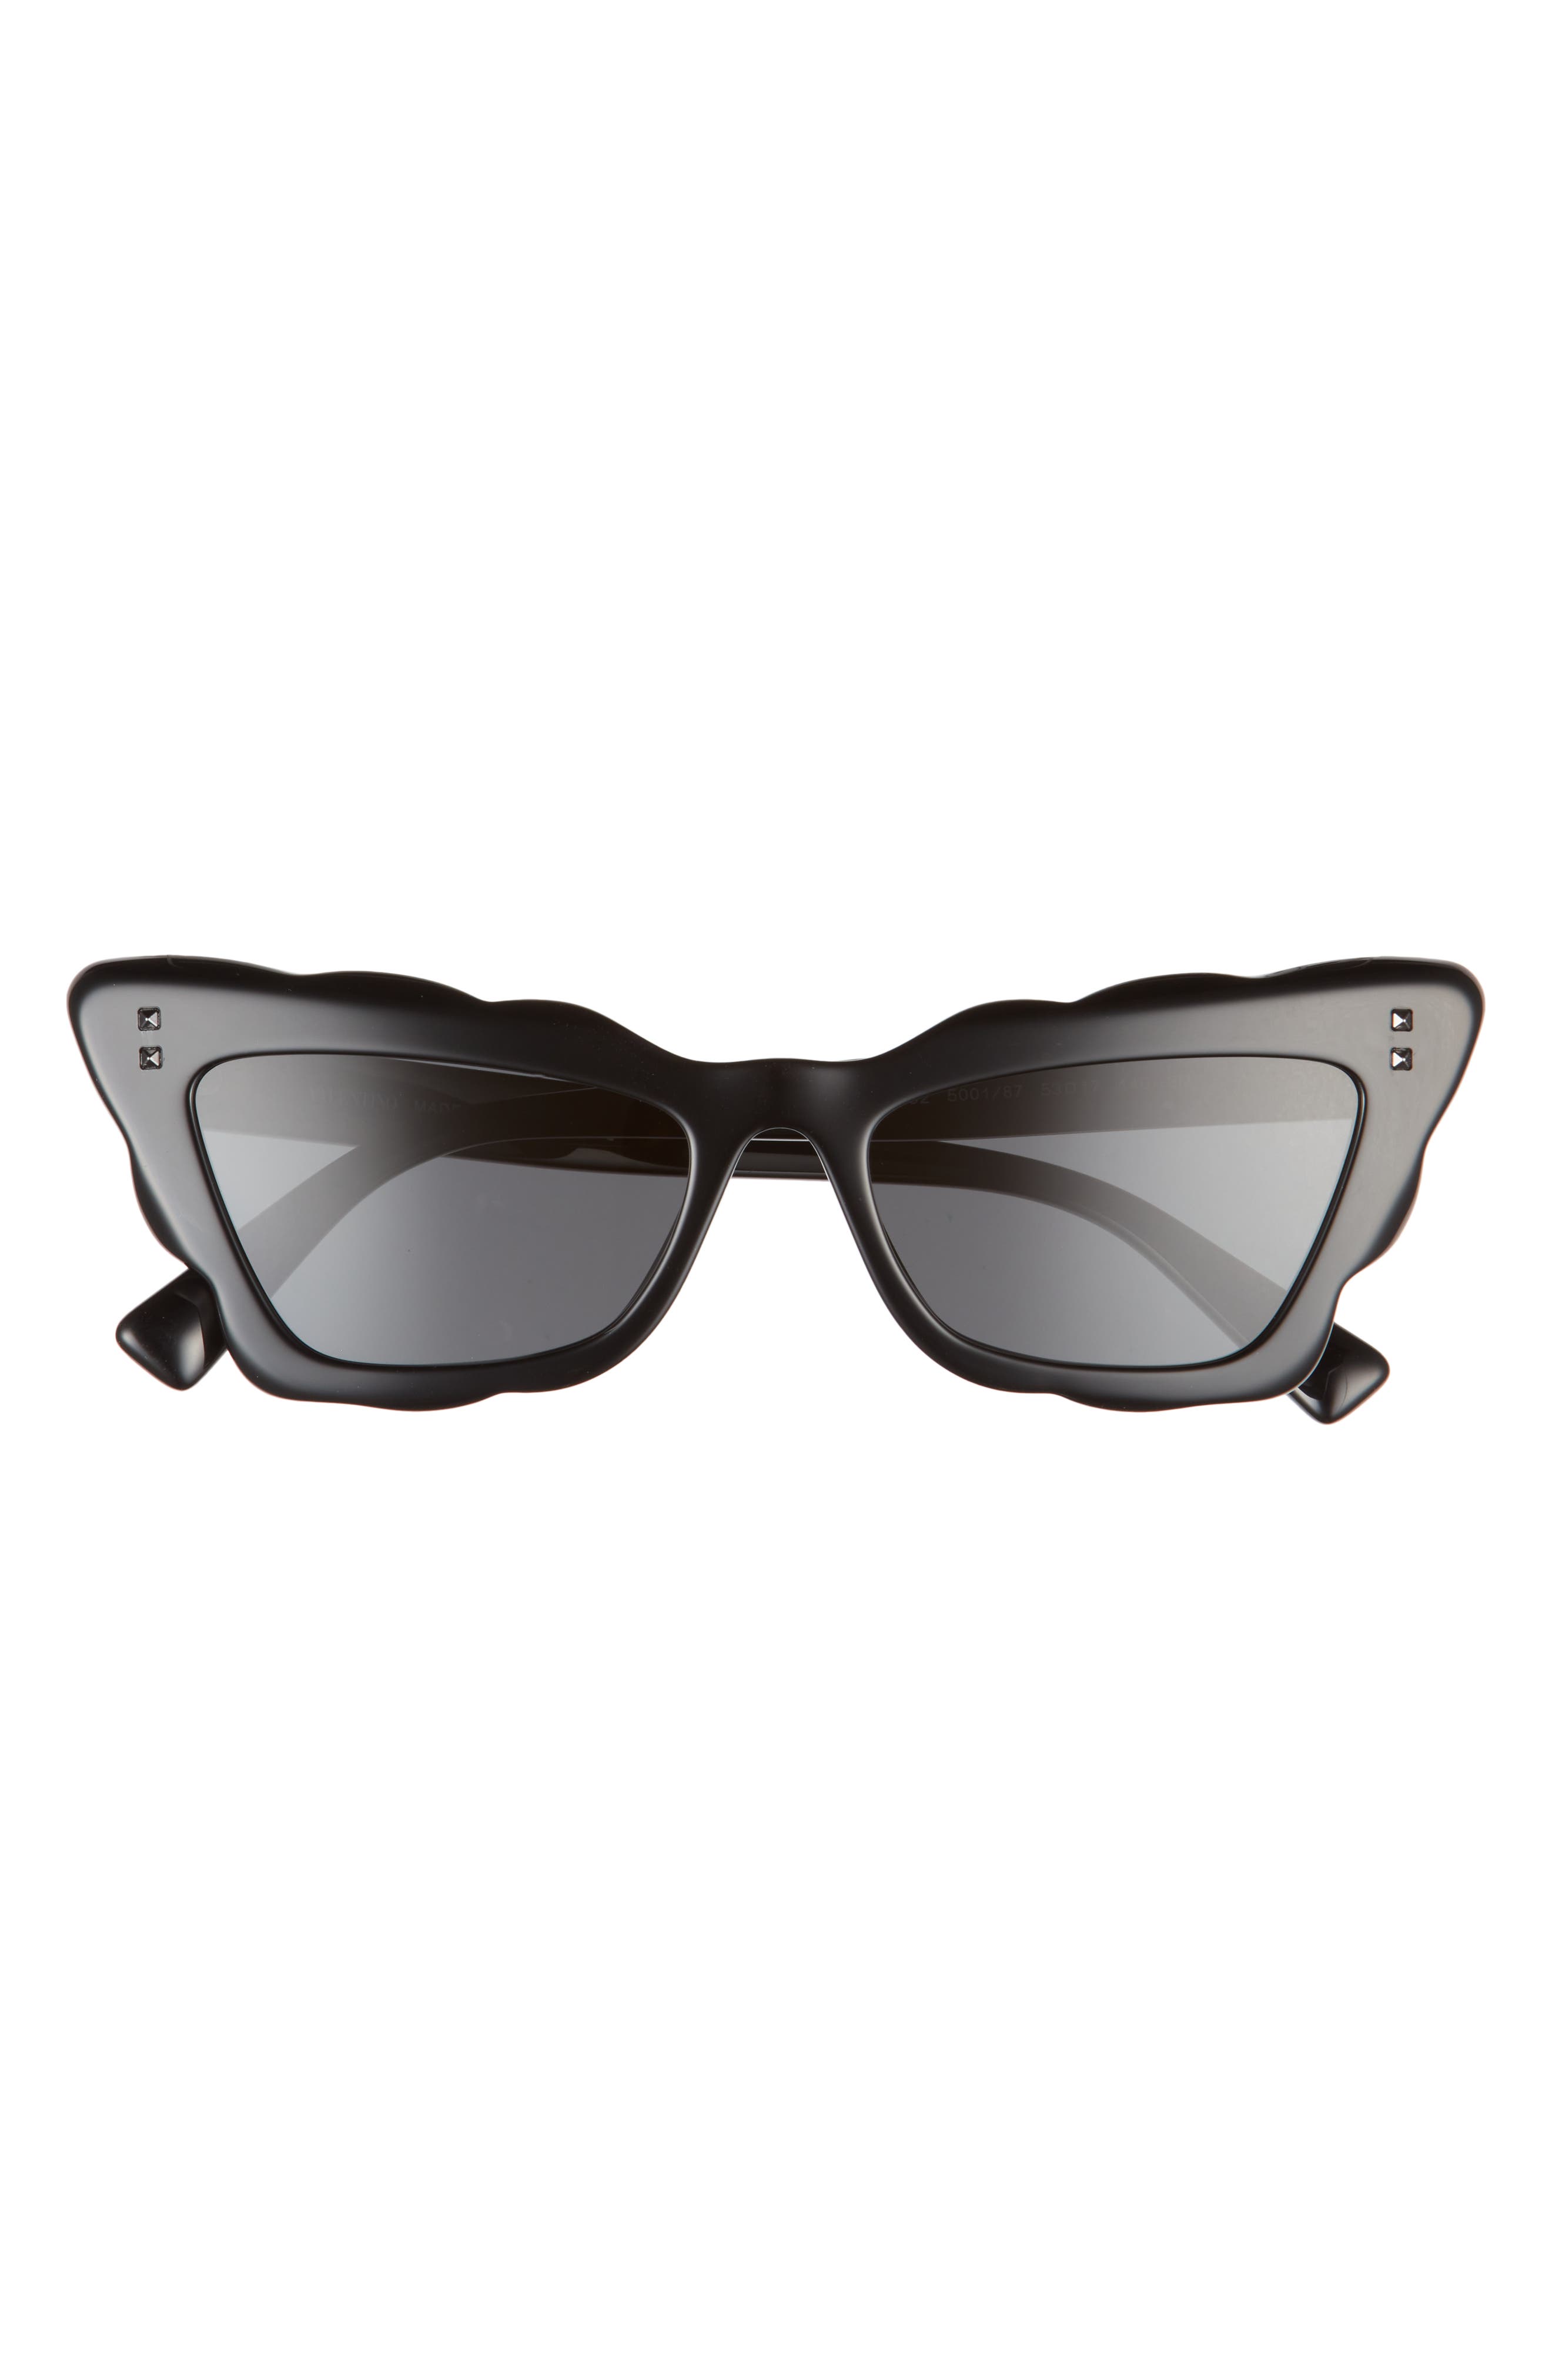 Valentino 53mm Cat Eye Sunglasses in Black at Nordstrom